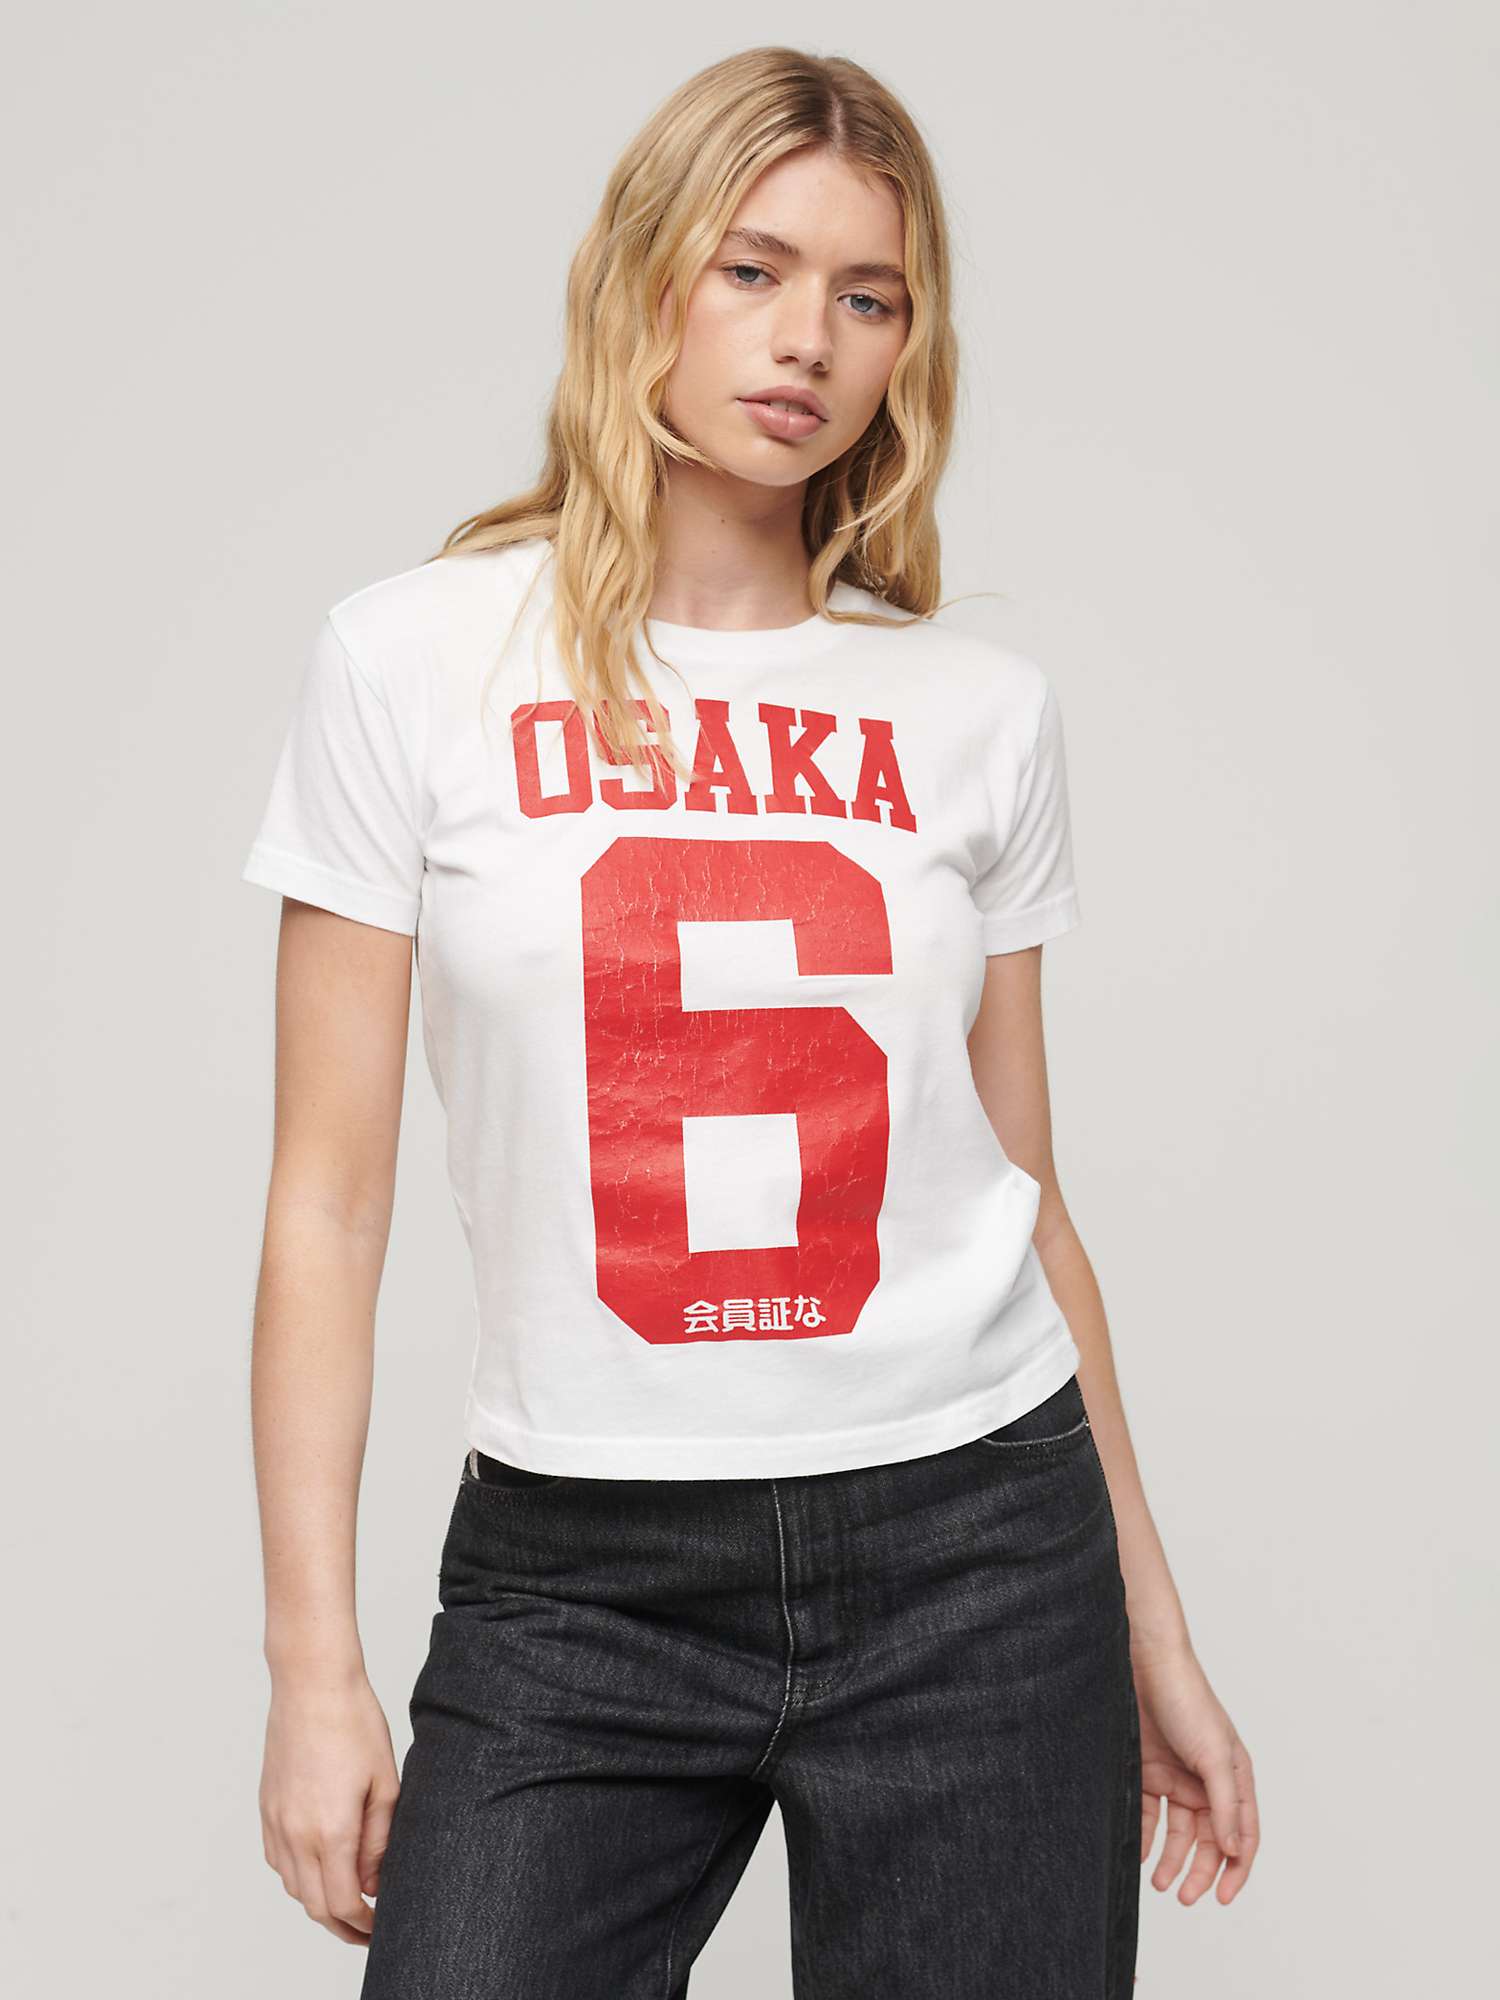 Buy Superdry Osaka 6 Cracked Print 90s T-Shirt, Winterwhite/Red Online at johnlewis.com